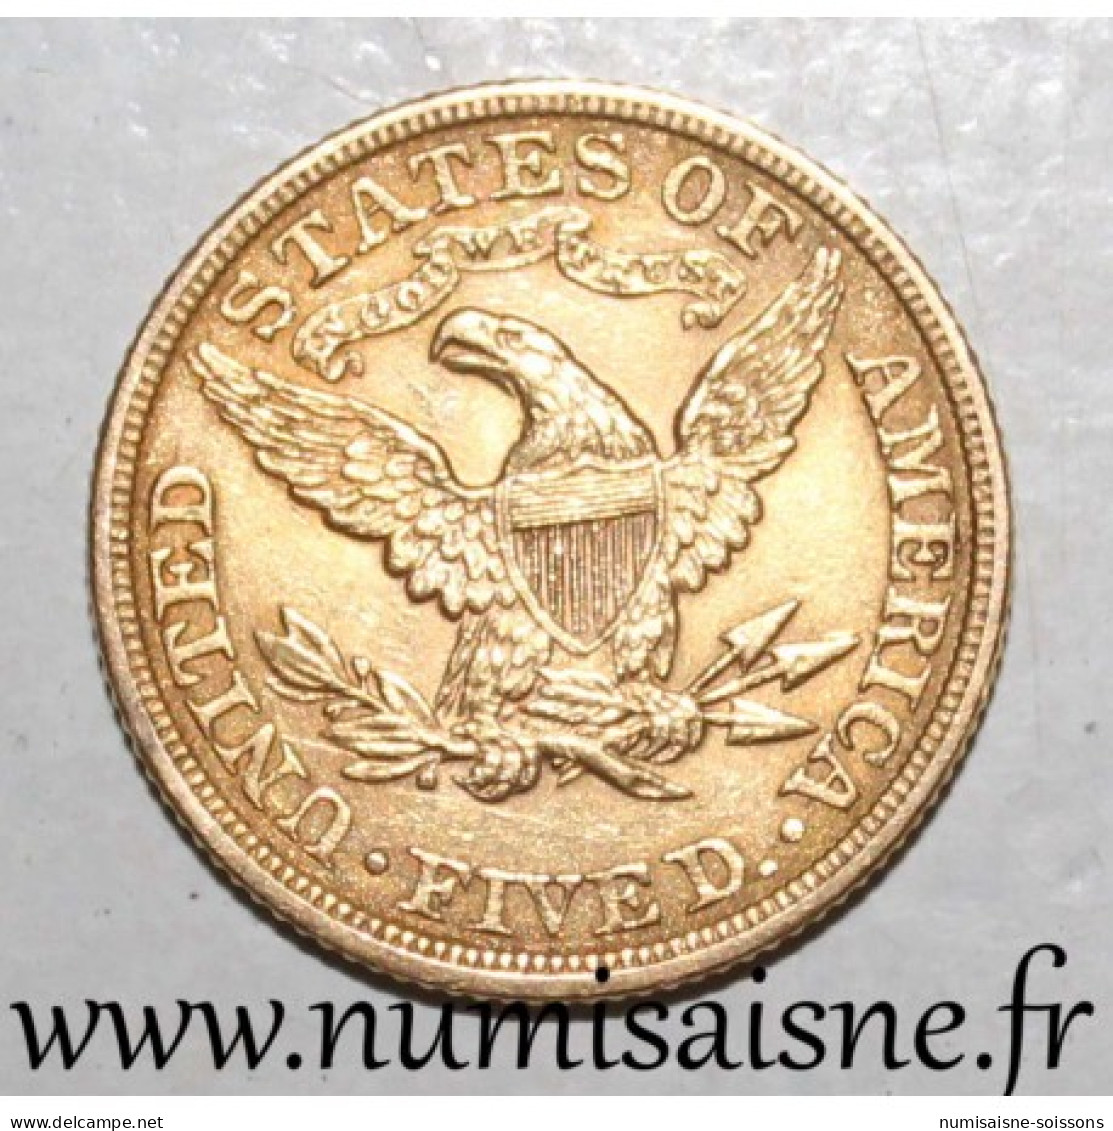 ÉTATS UNIS - KM 101 - 5 DOLLARS 1899 - Philadelphie - LIBERTY - OR - TTB - 5$ - Half Eagles - 1866-1908: Coronet Head